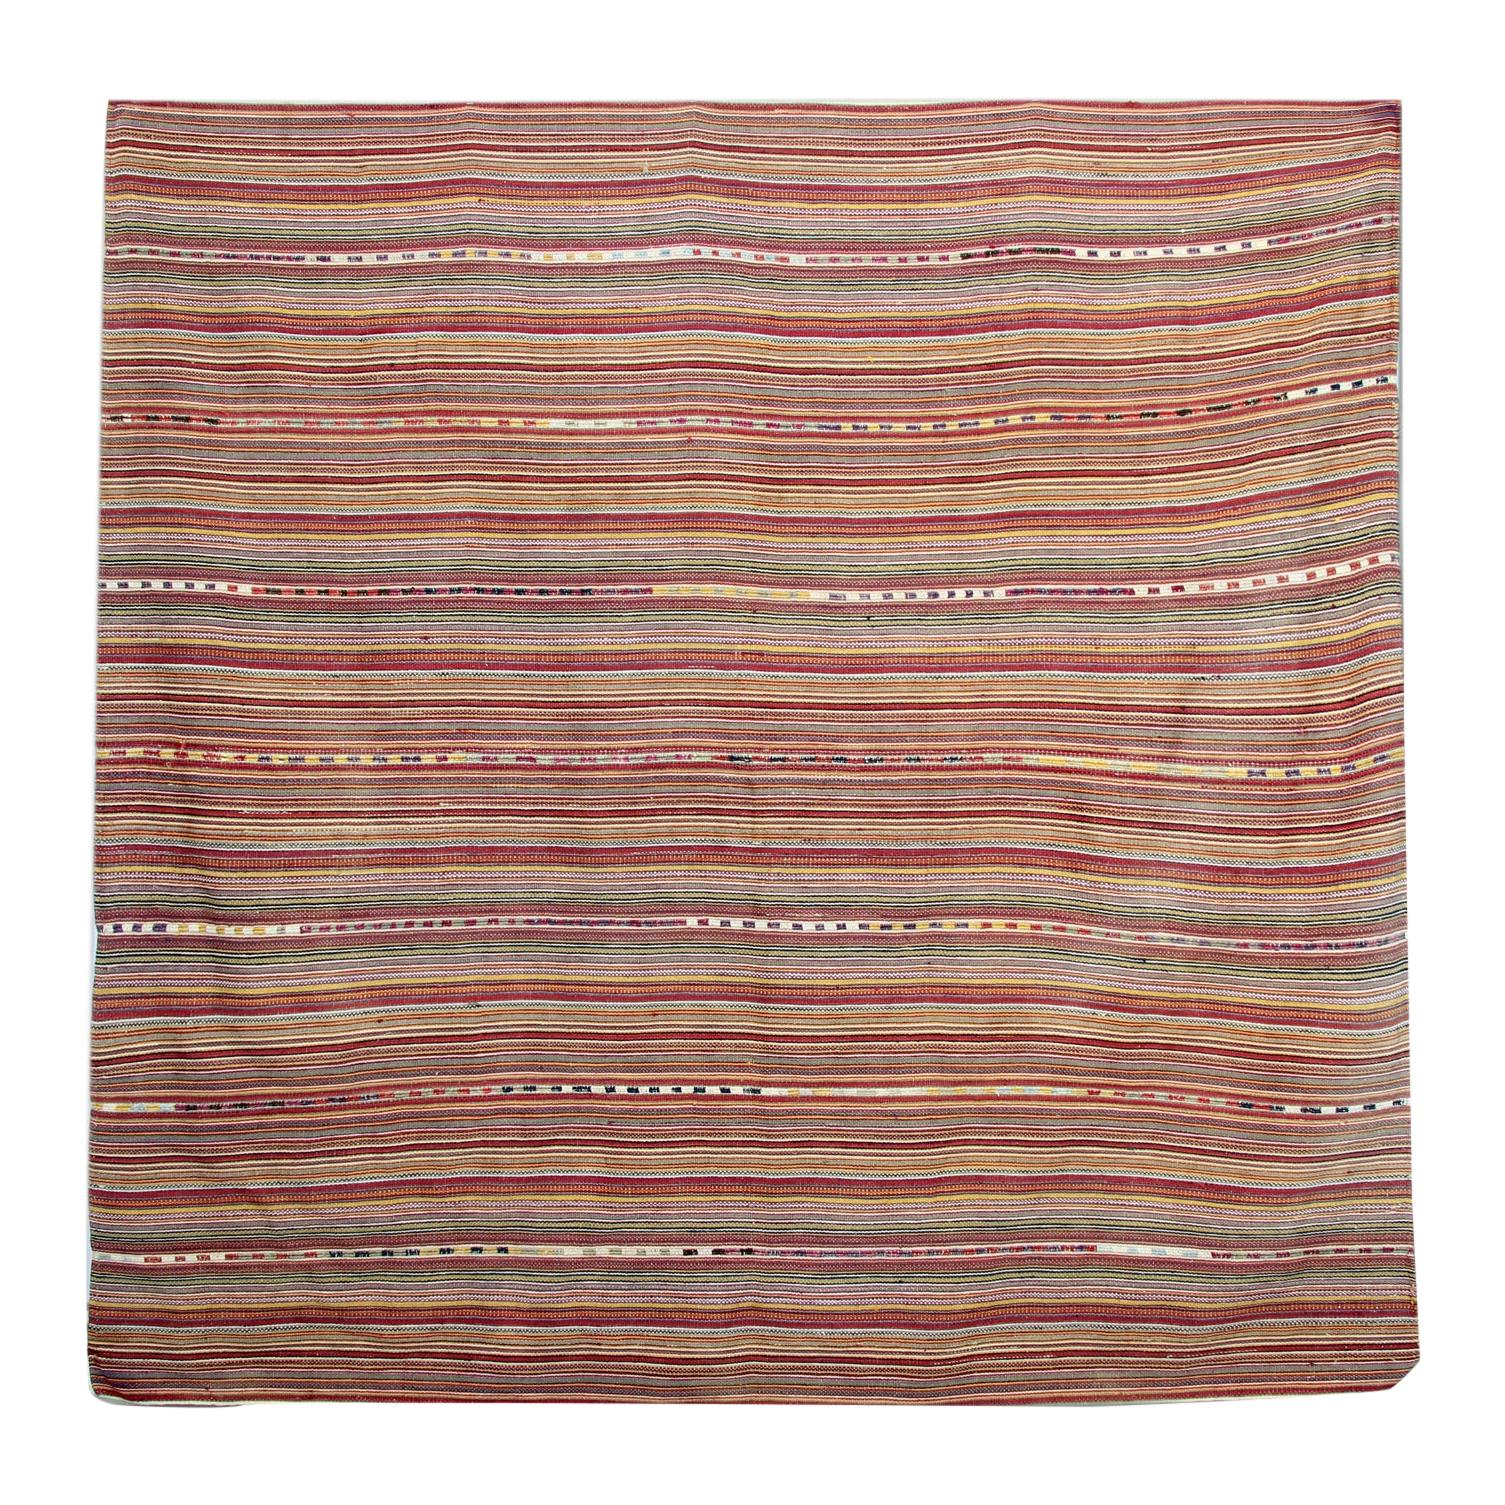 Handmade Kilim Rugs, Antique Wool Jajim, Striped Red Cream Wool Textile